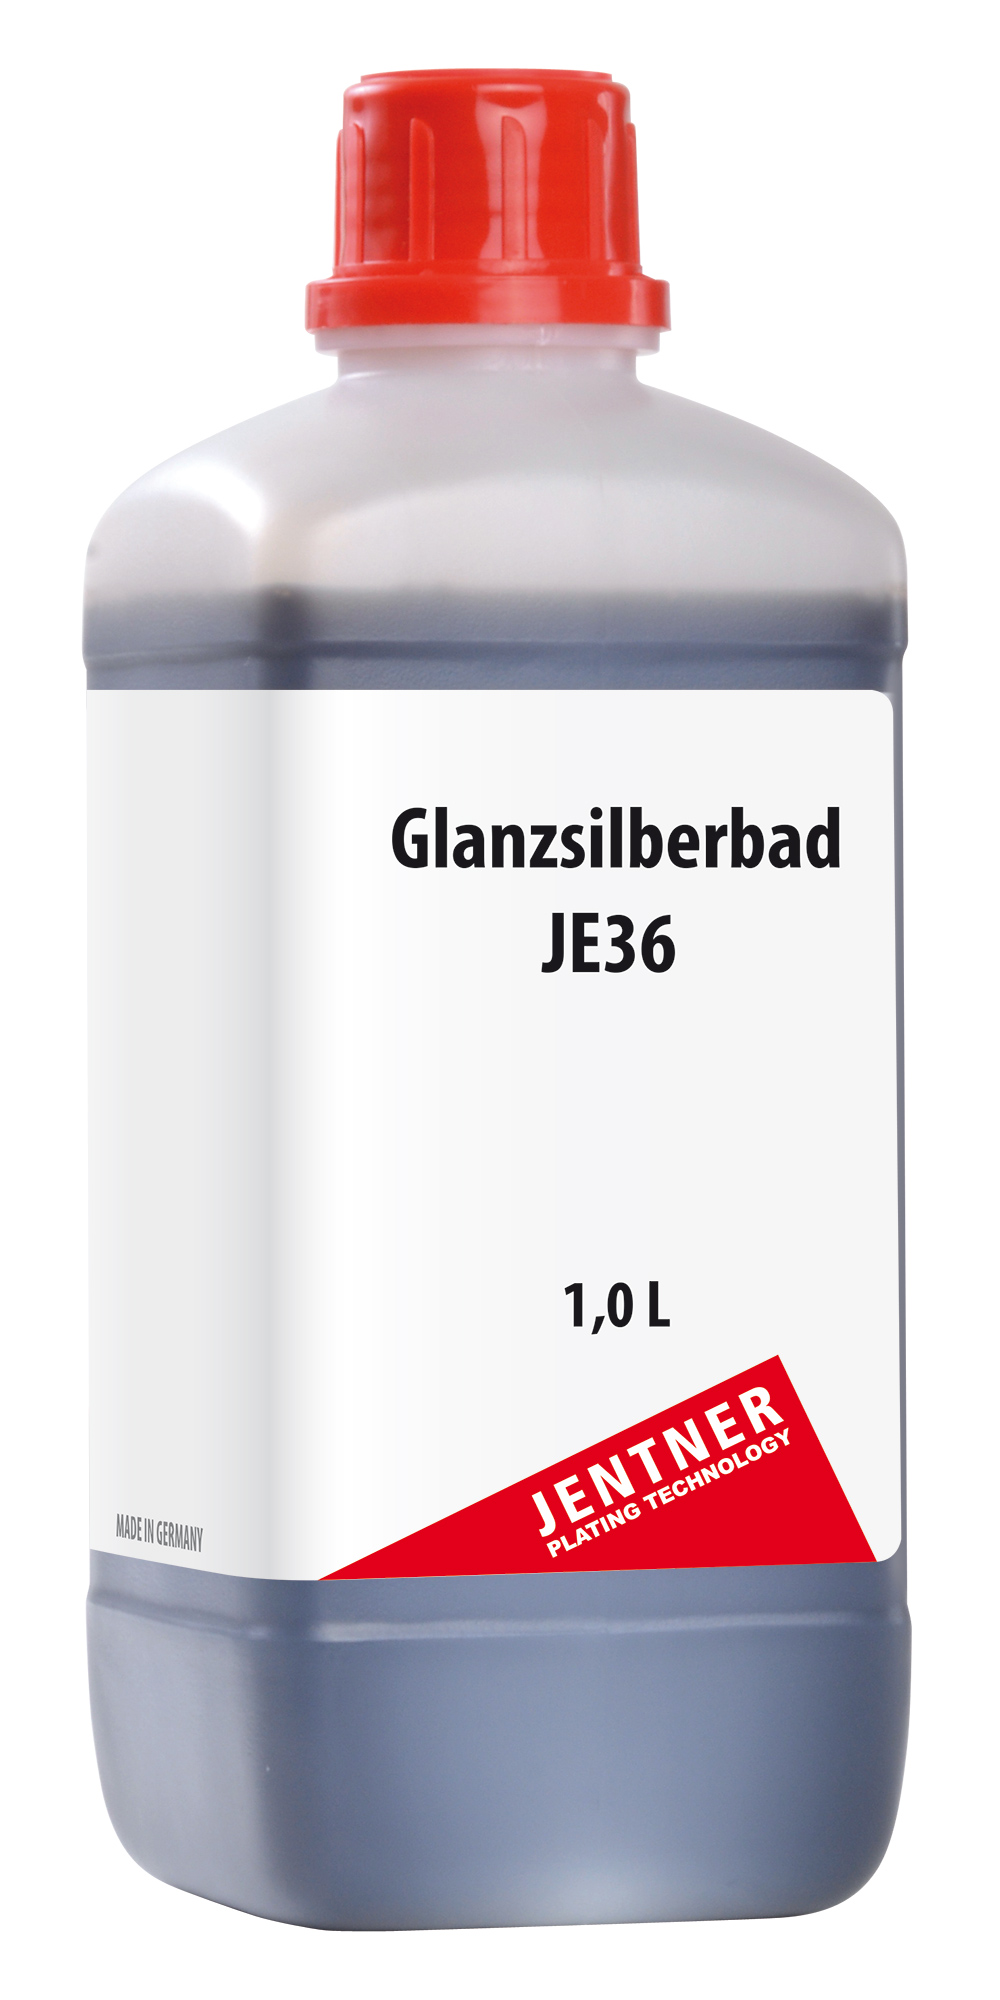 Glanzsilberbad JE36